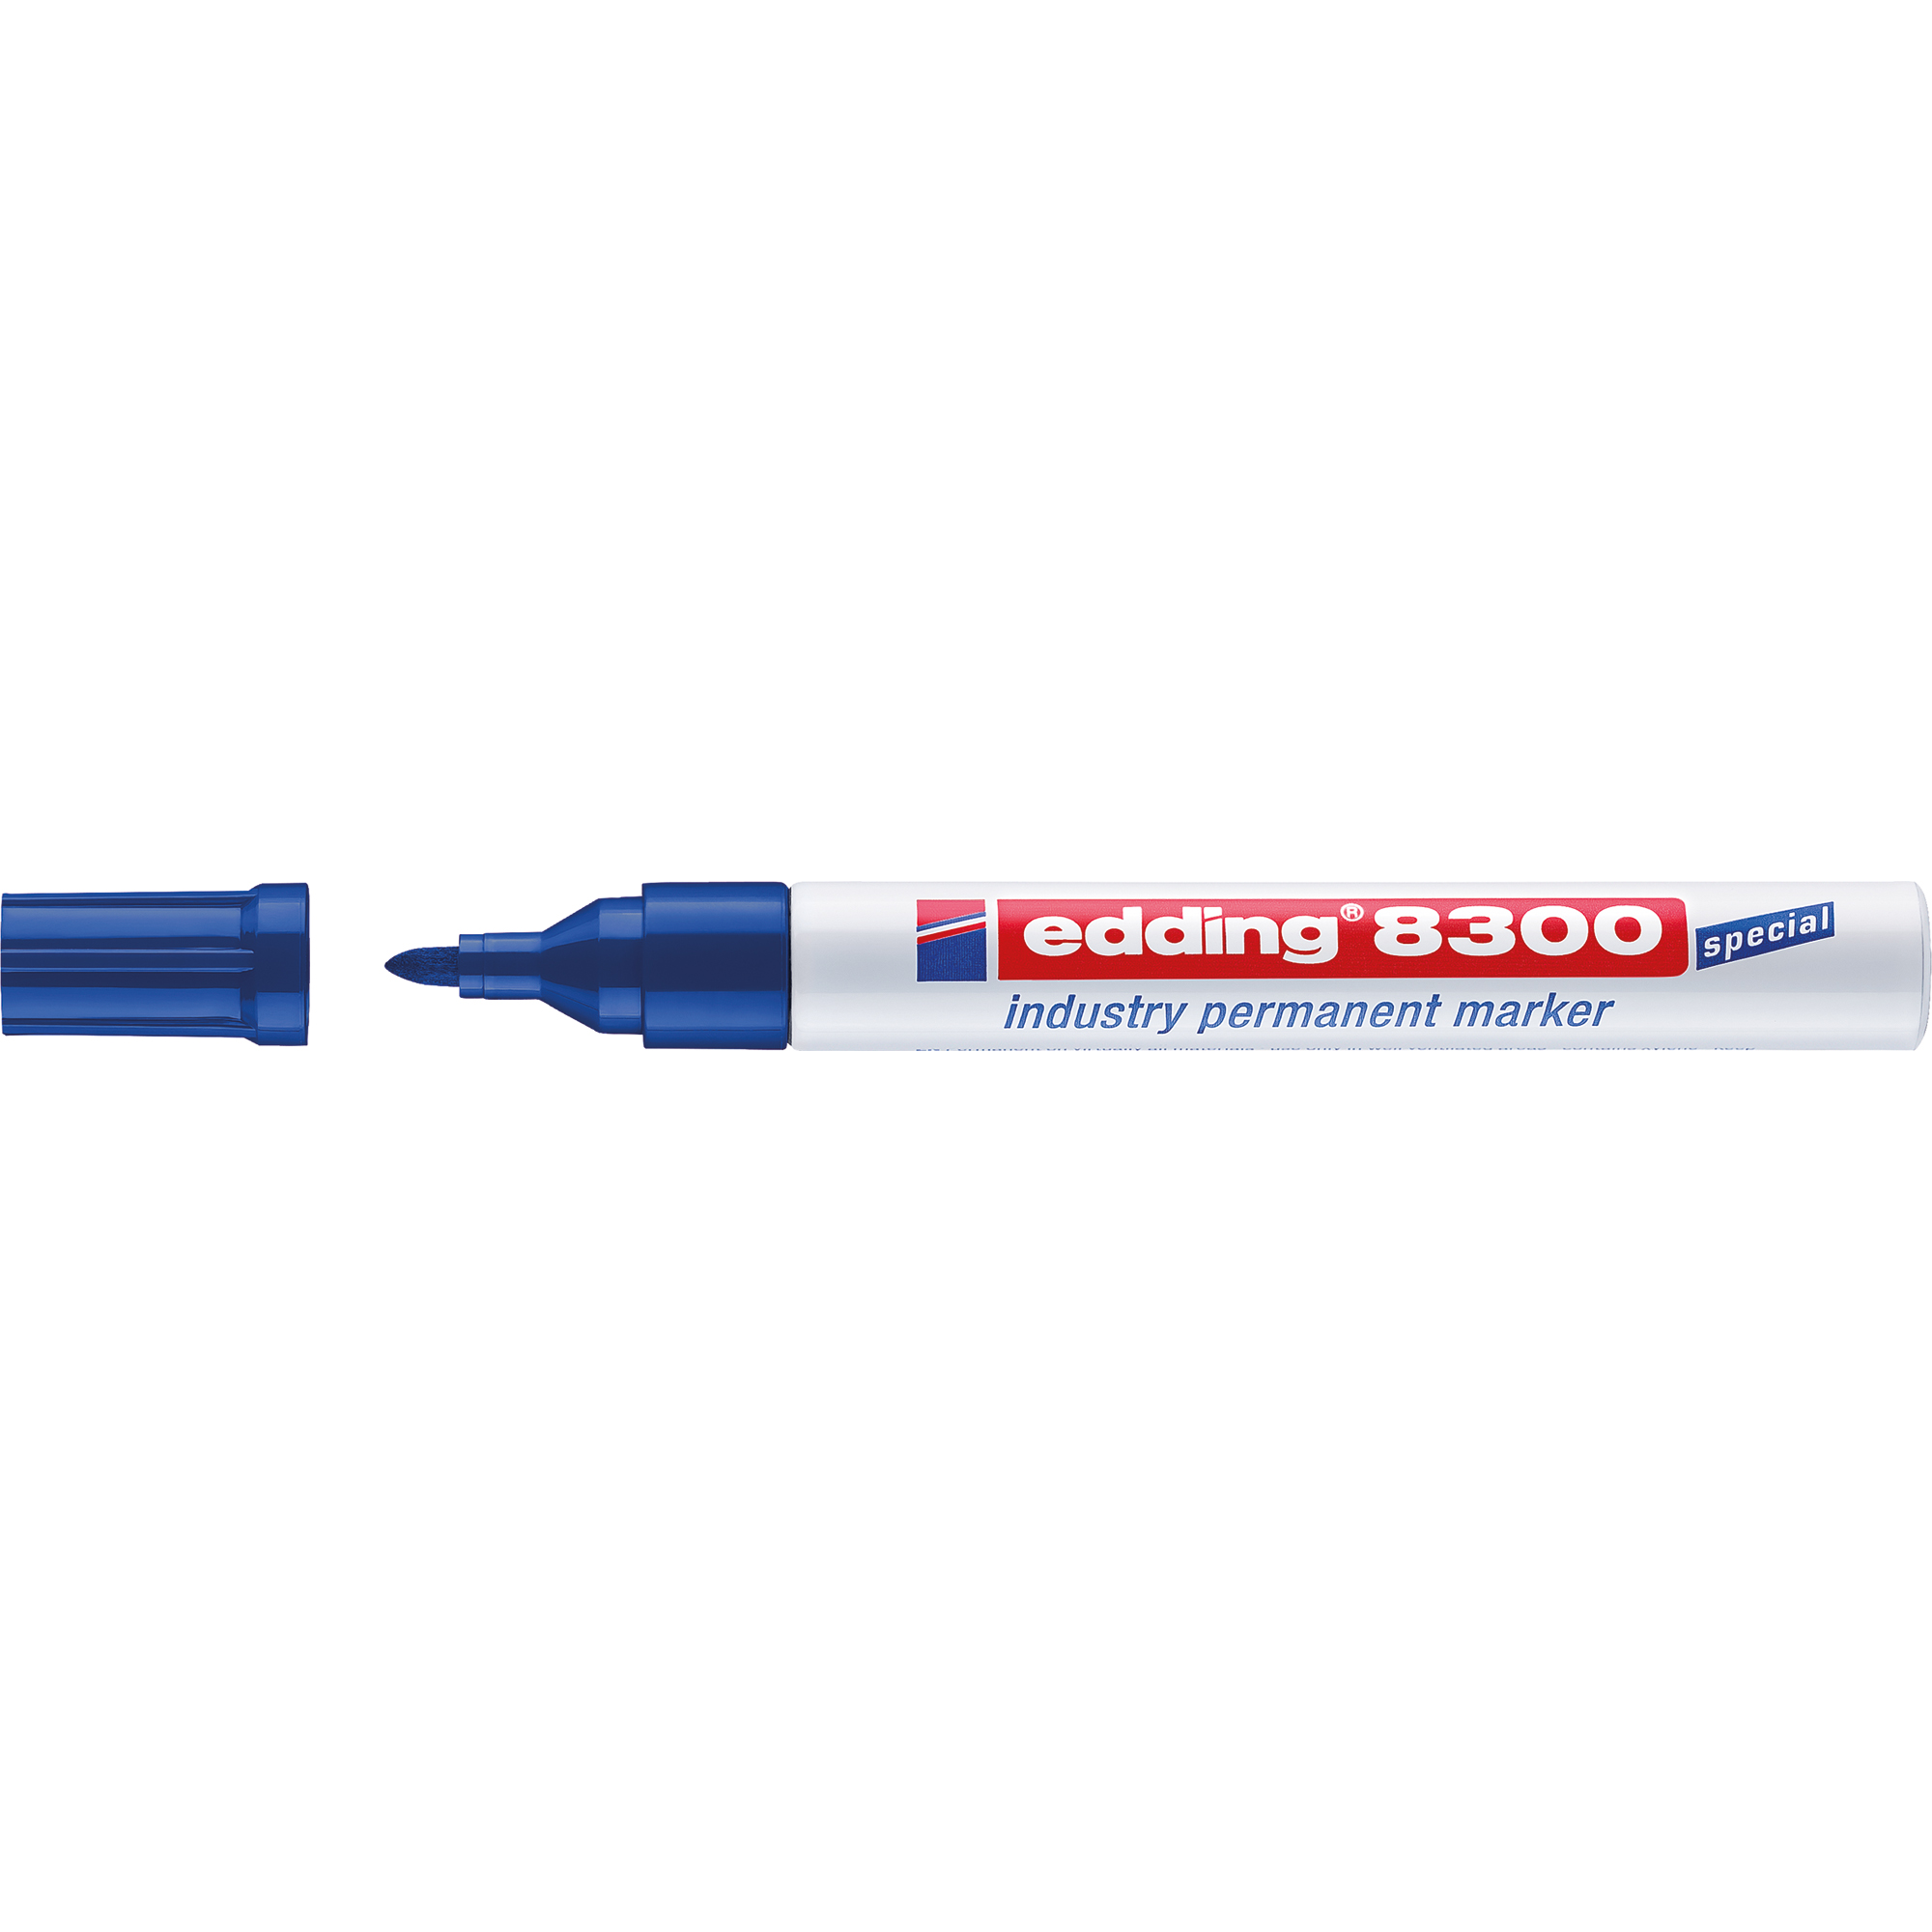 edding Permanentmarker 8300 industry blau